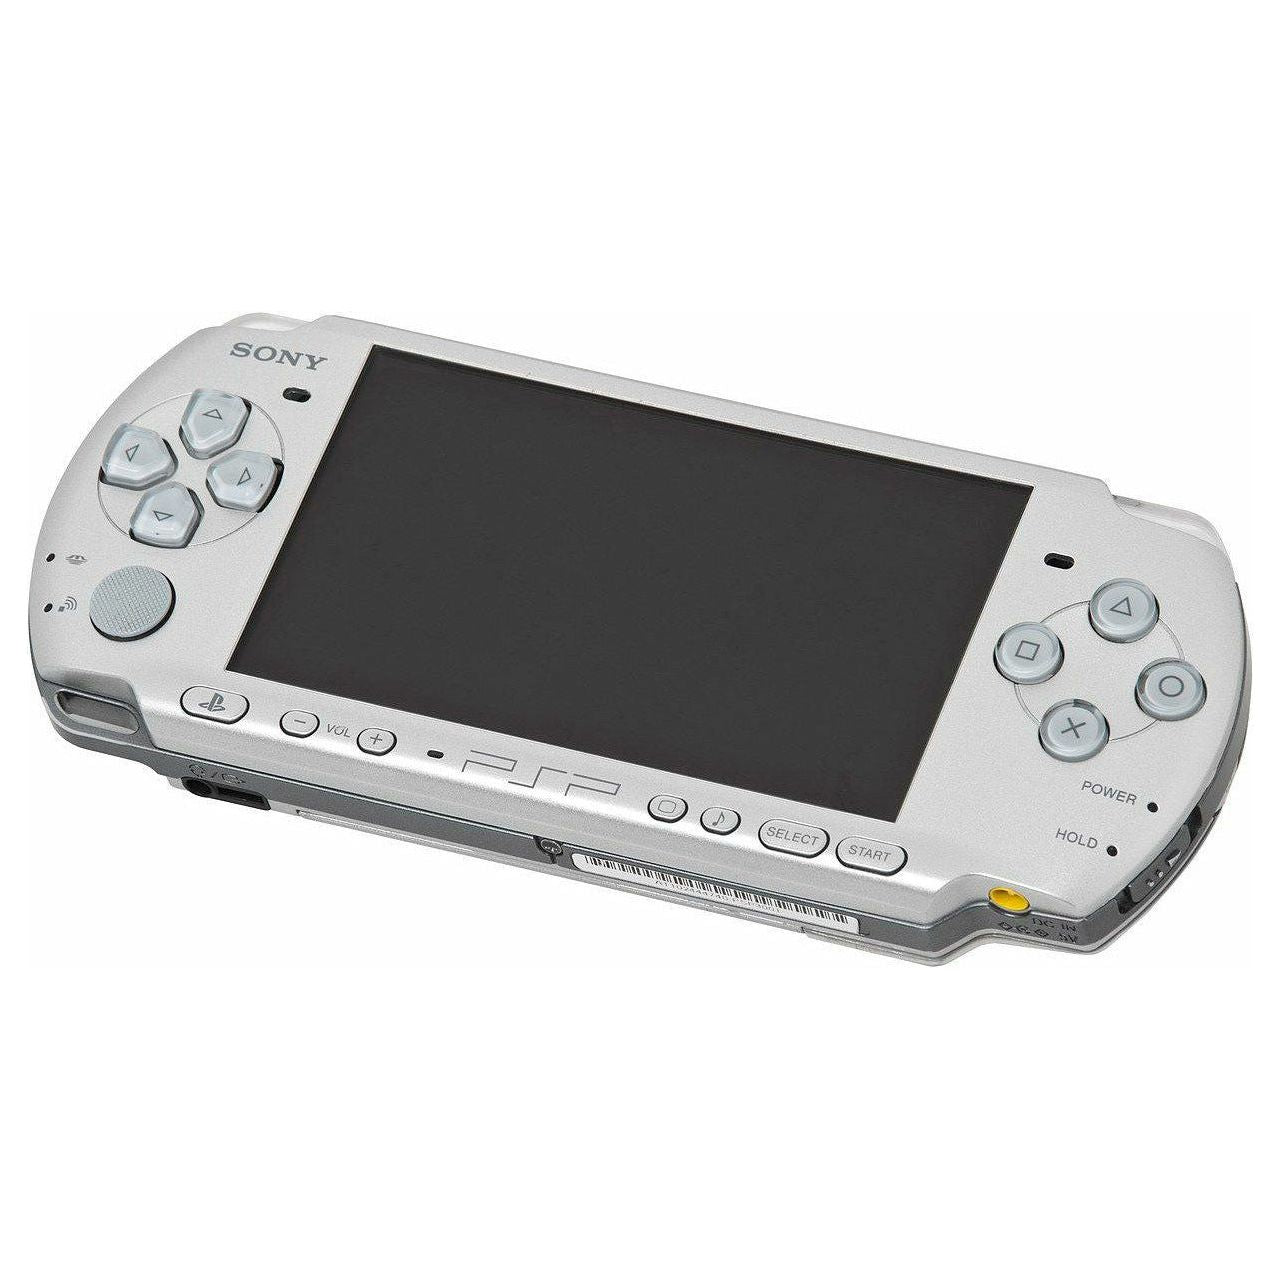 PSP System - Model 1000 (Silver)